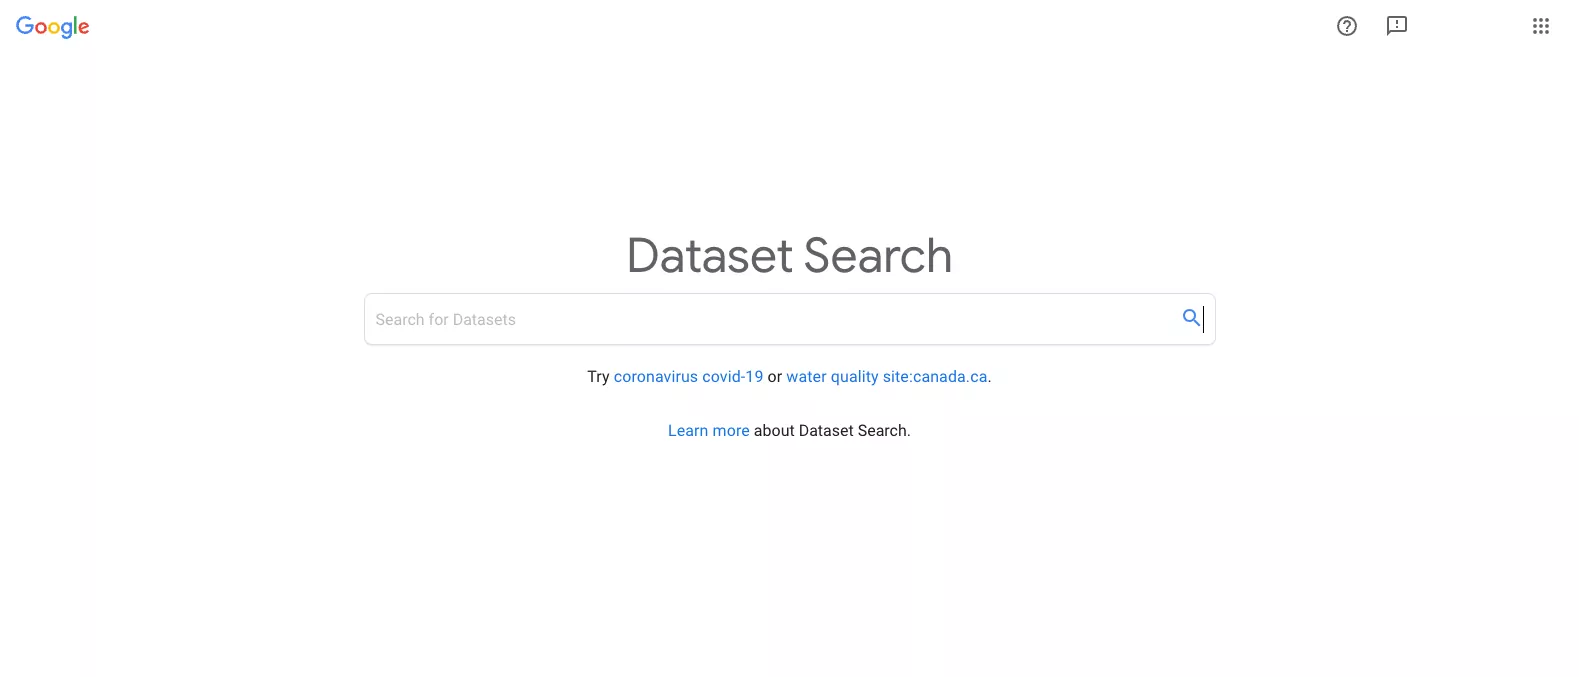 وب سایت Google Dataset Search